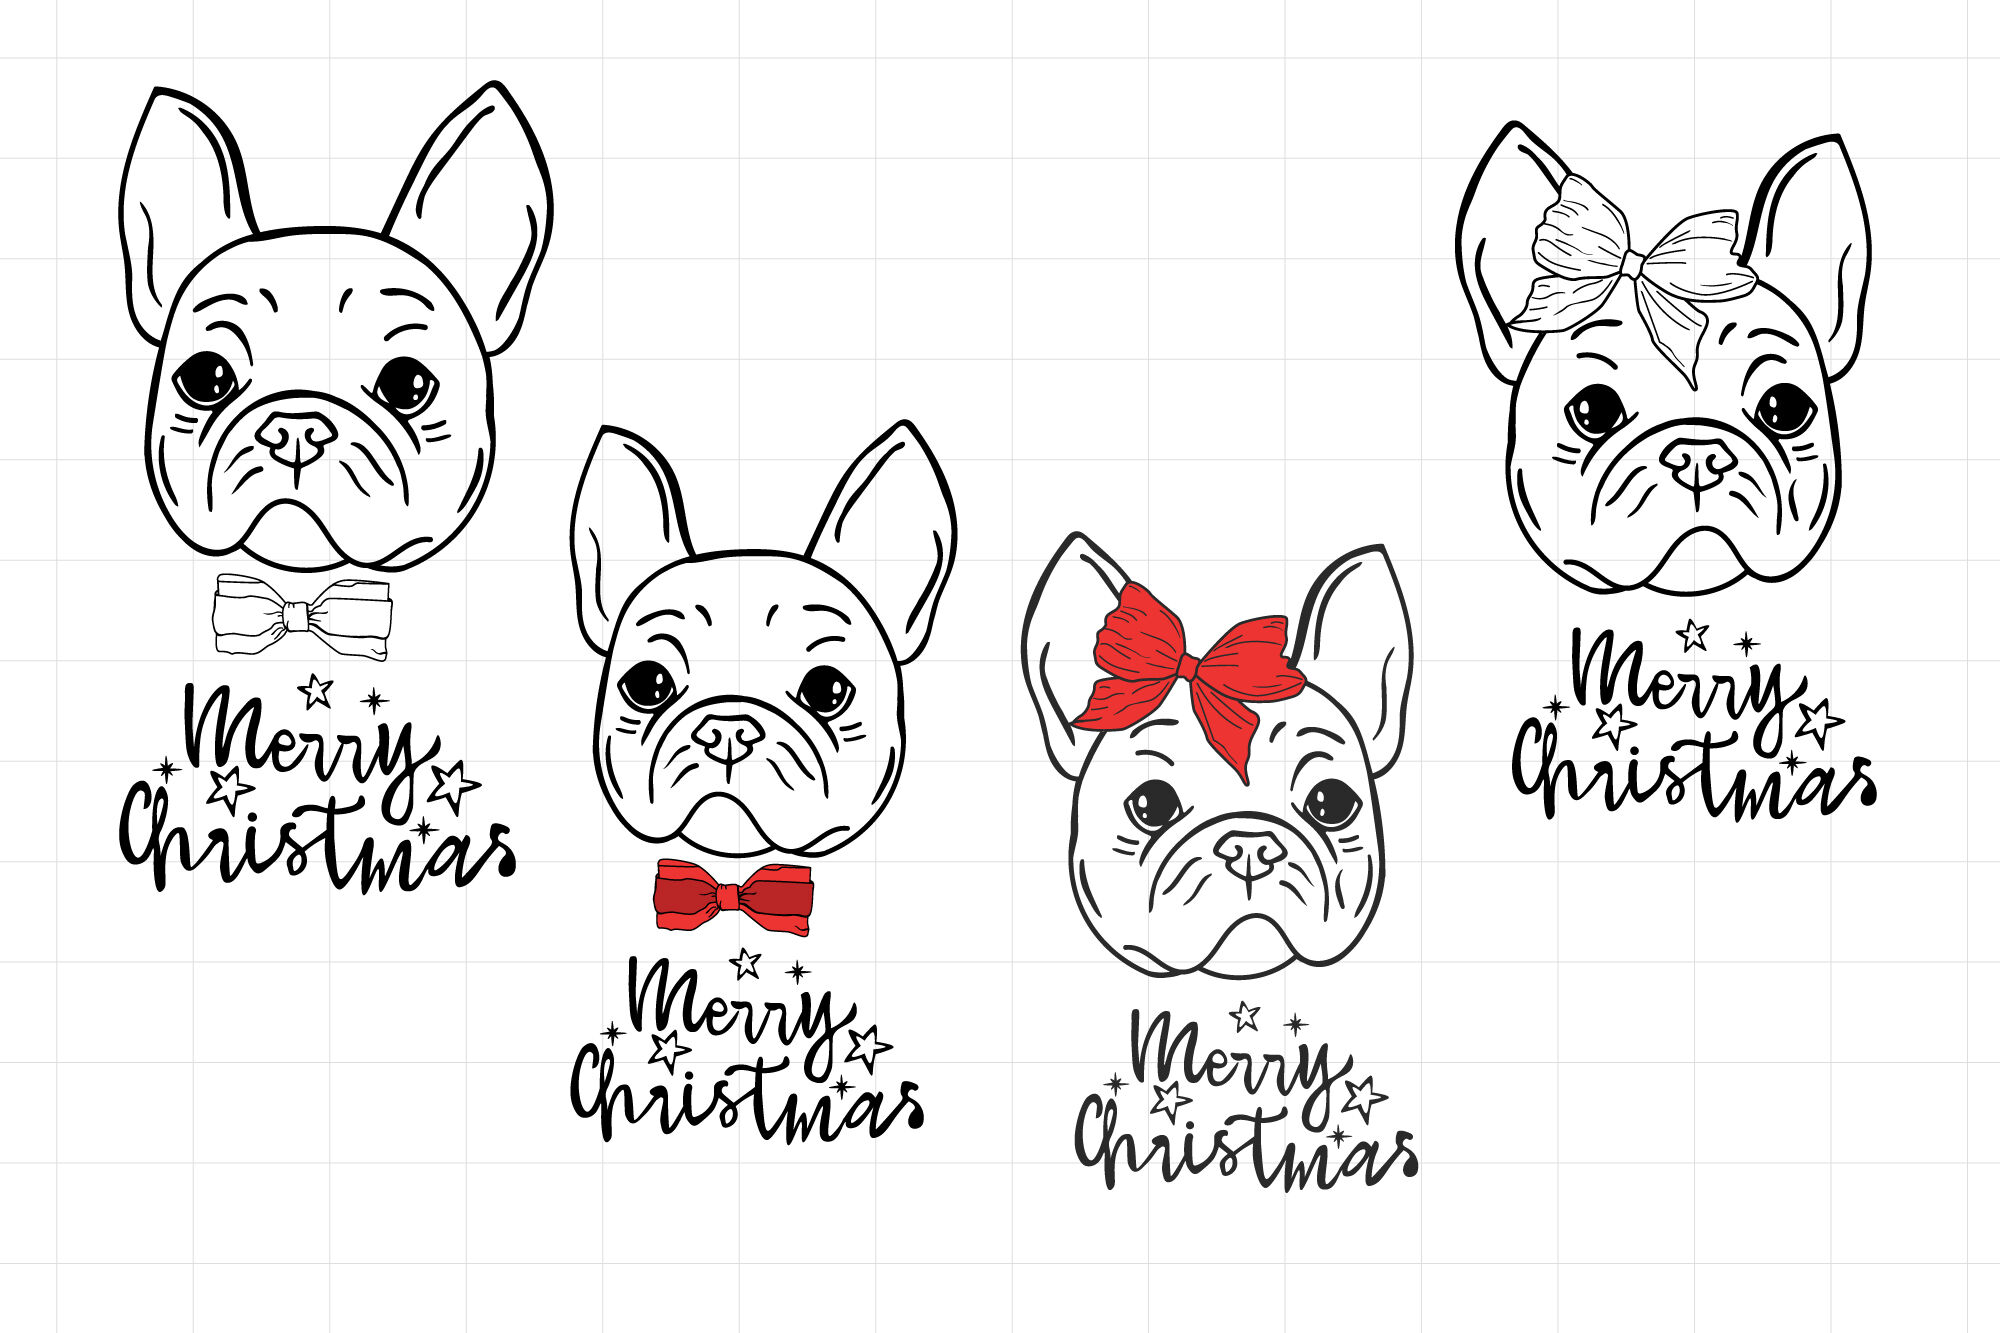 French bulldog / Christmas card with dog / billdog svg By SashaAuzaShop